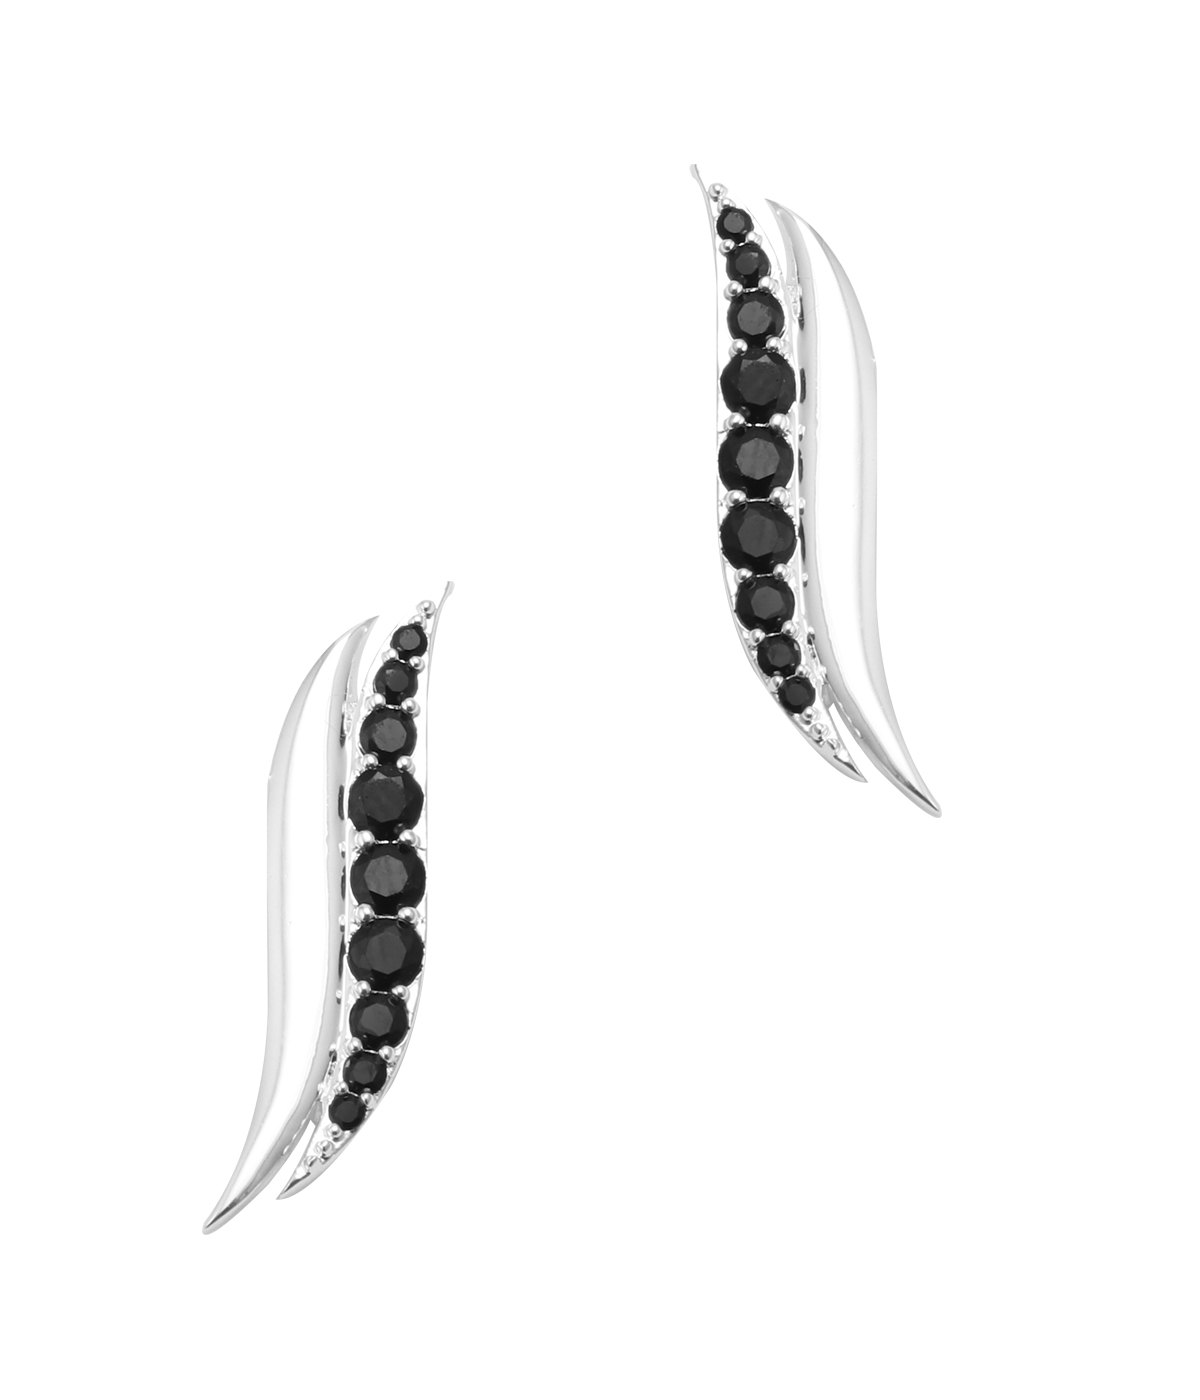 FLY Earrings - Black touch -latest EARRING,Clip On design 2021